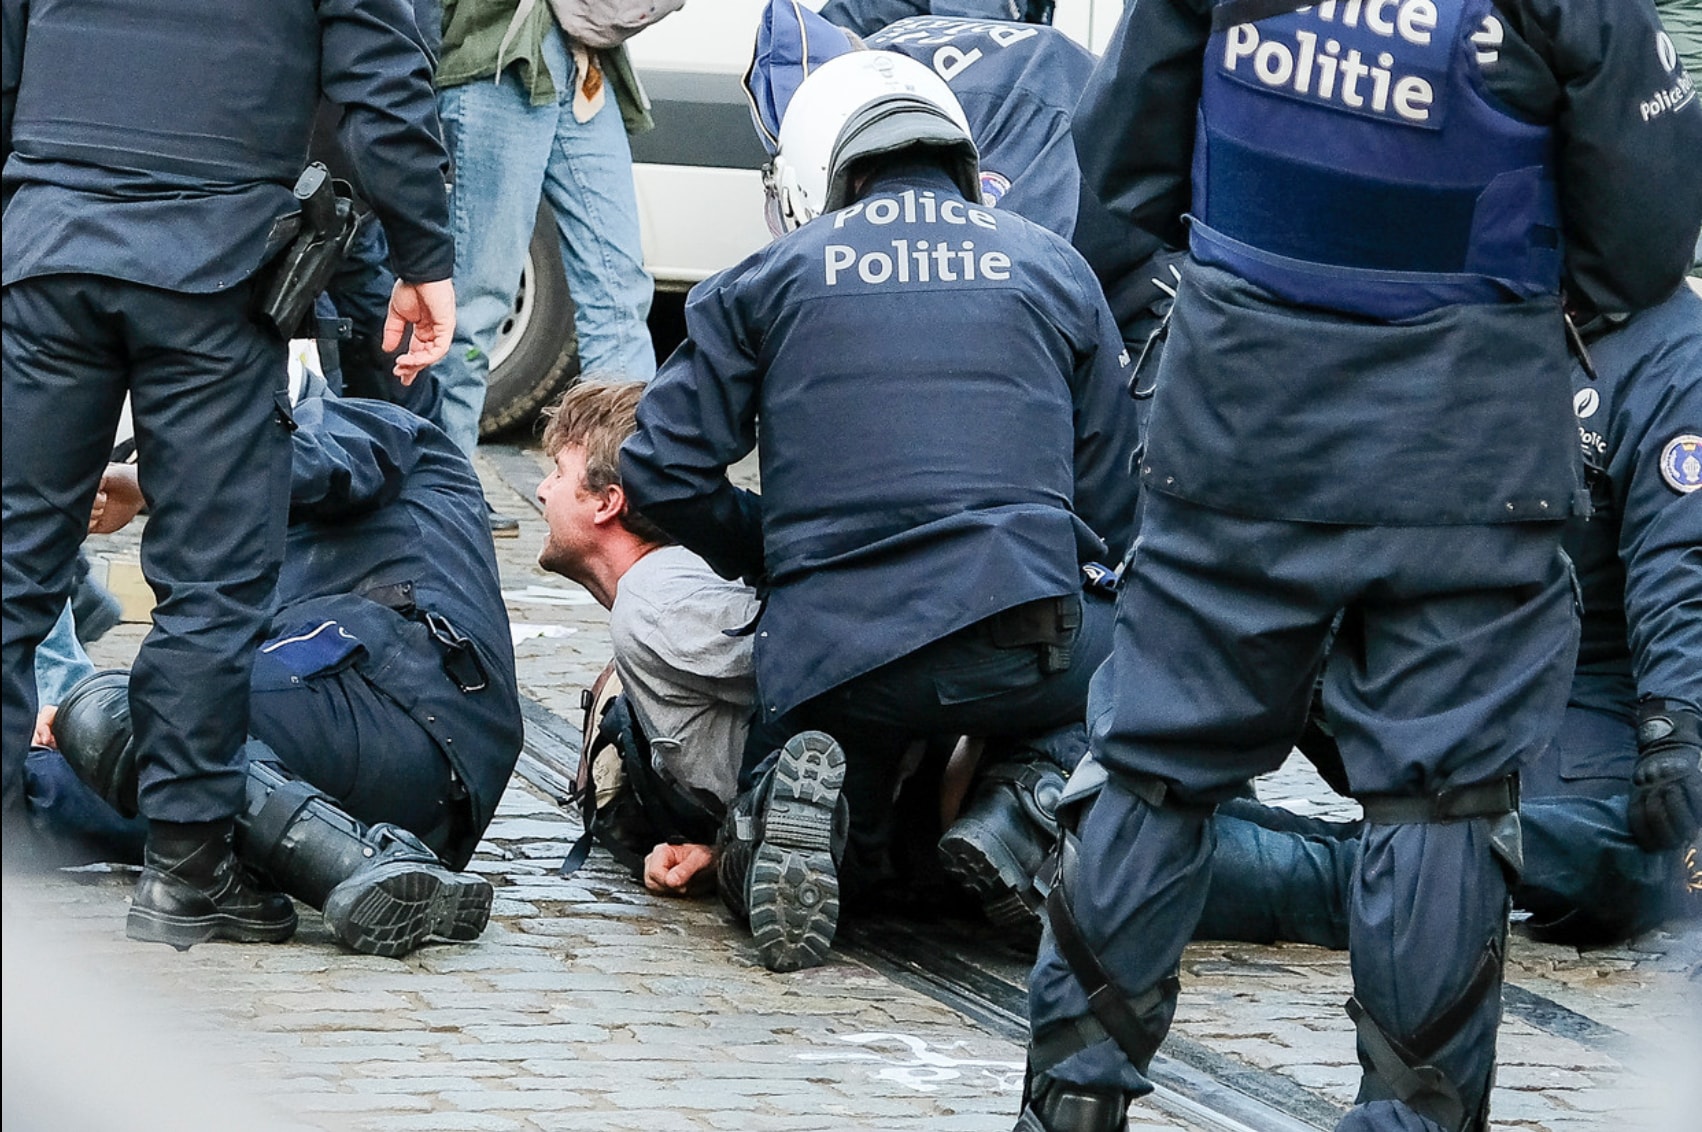 Vier tuchtprocedures opgestart rond politieoptreden bij actie Extinction Rebellion op Koningsplein